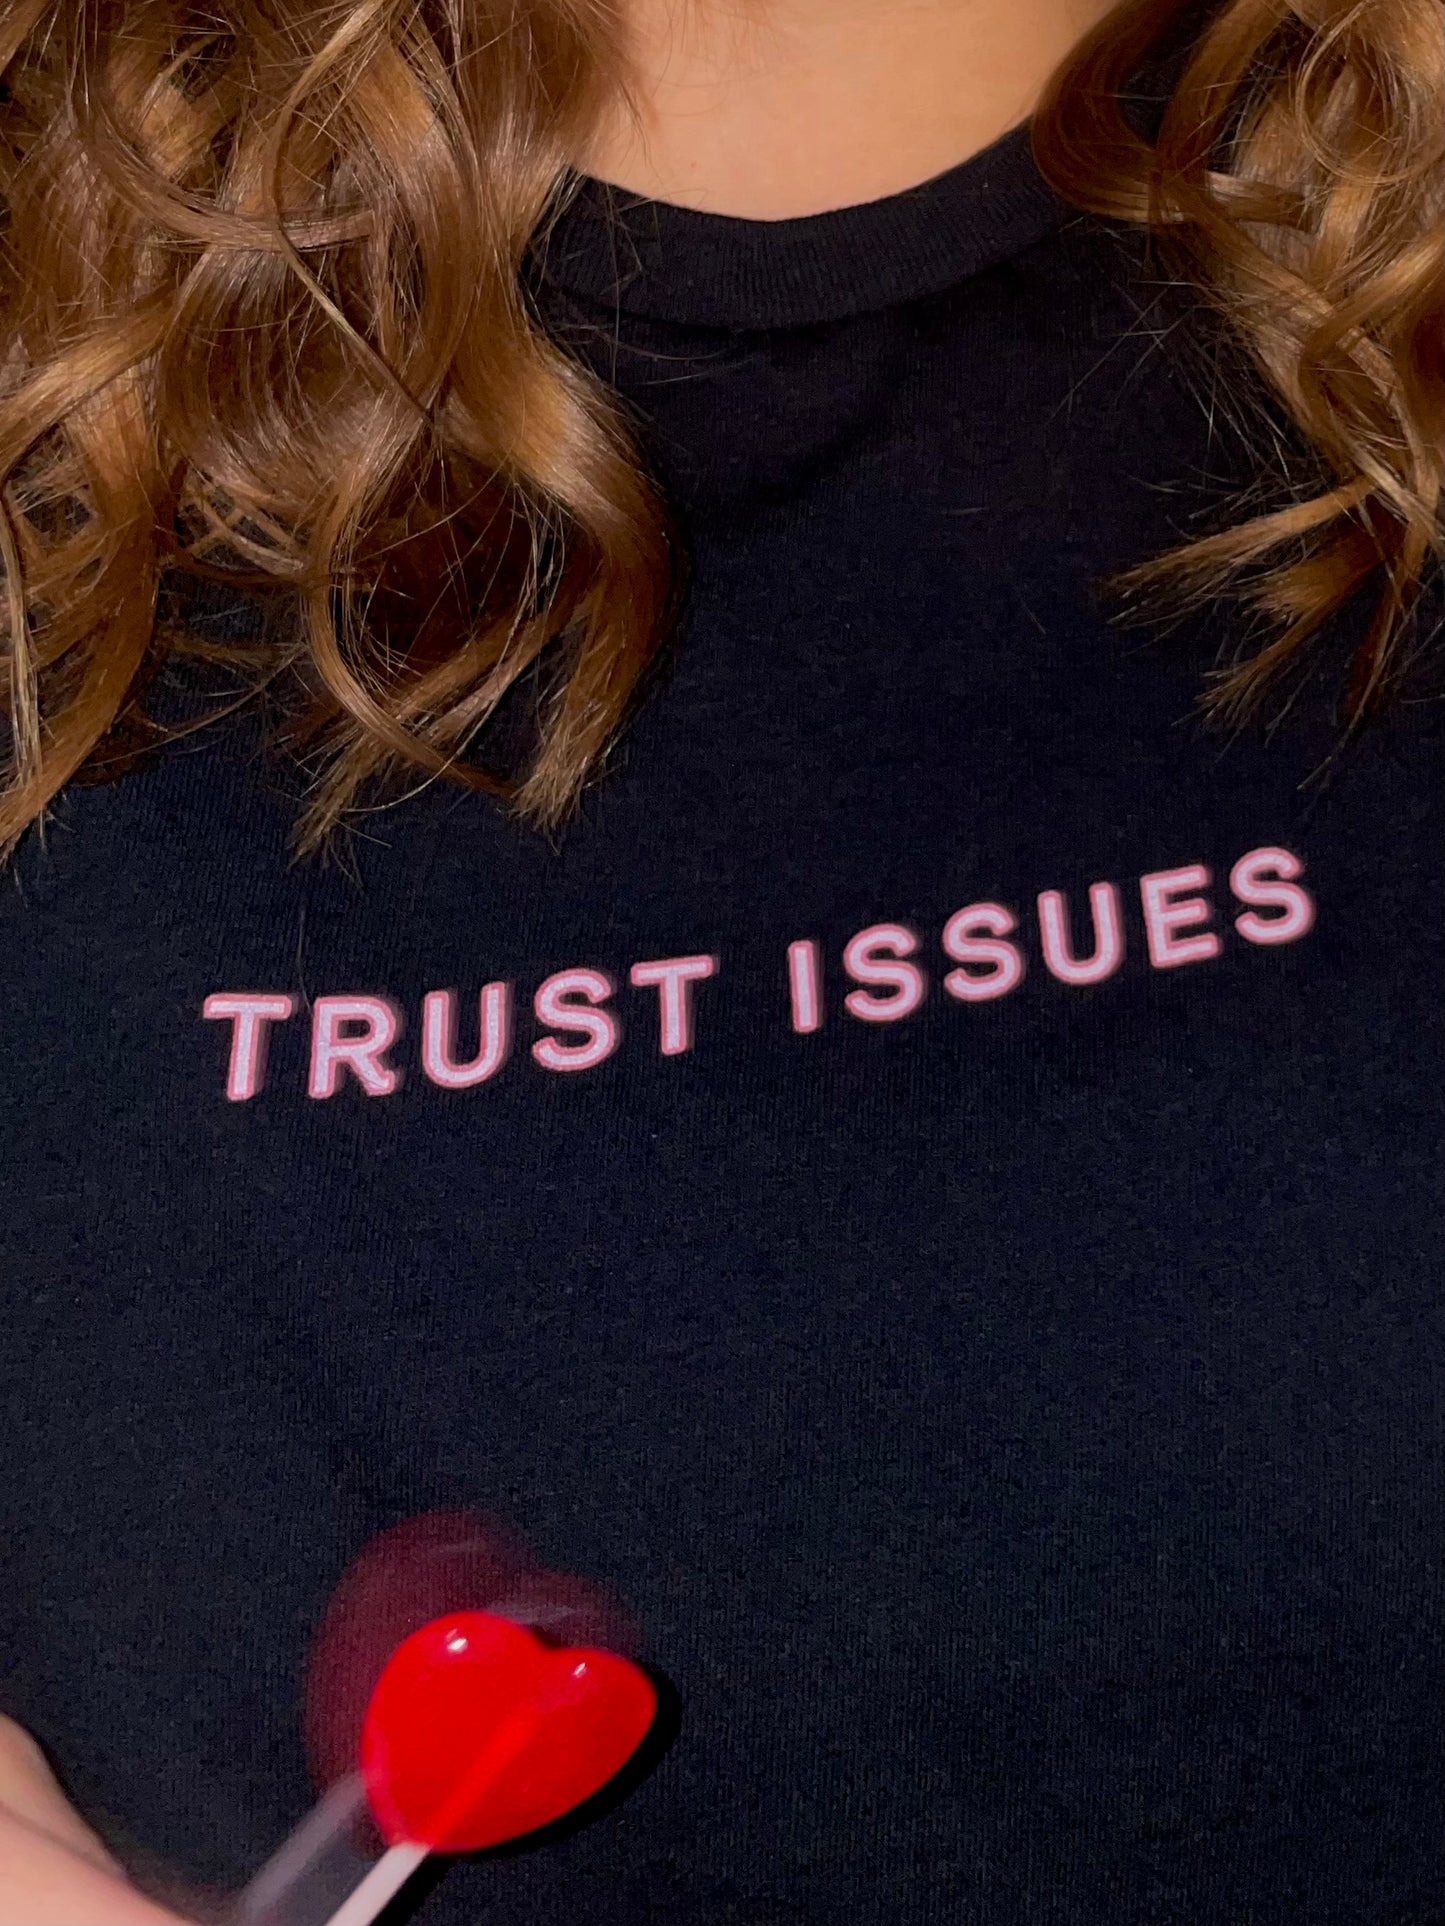 TRUST ISSUES - shirt